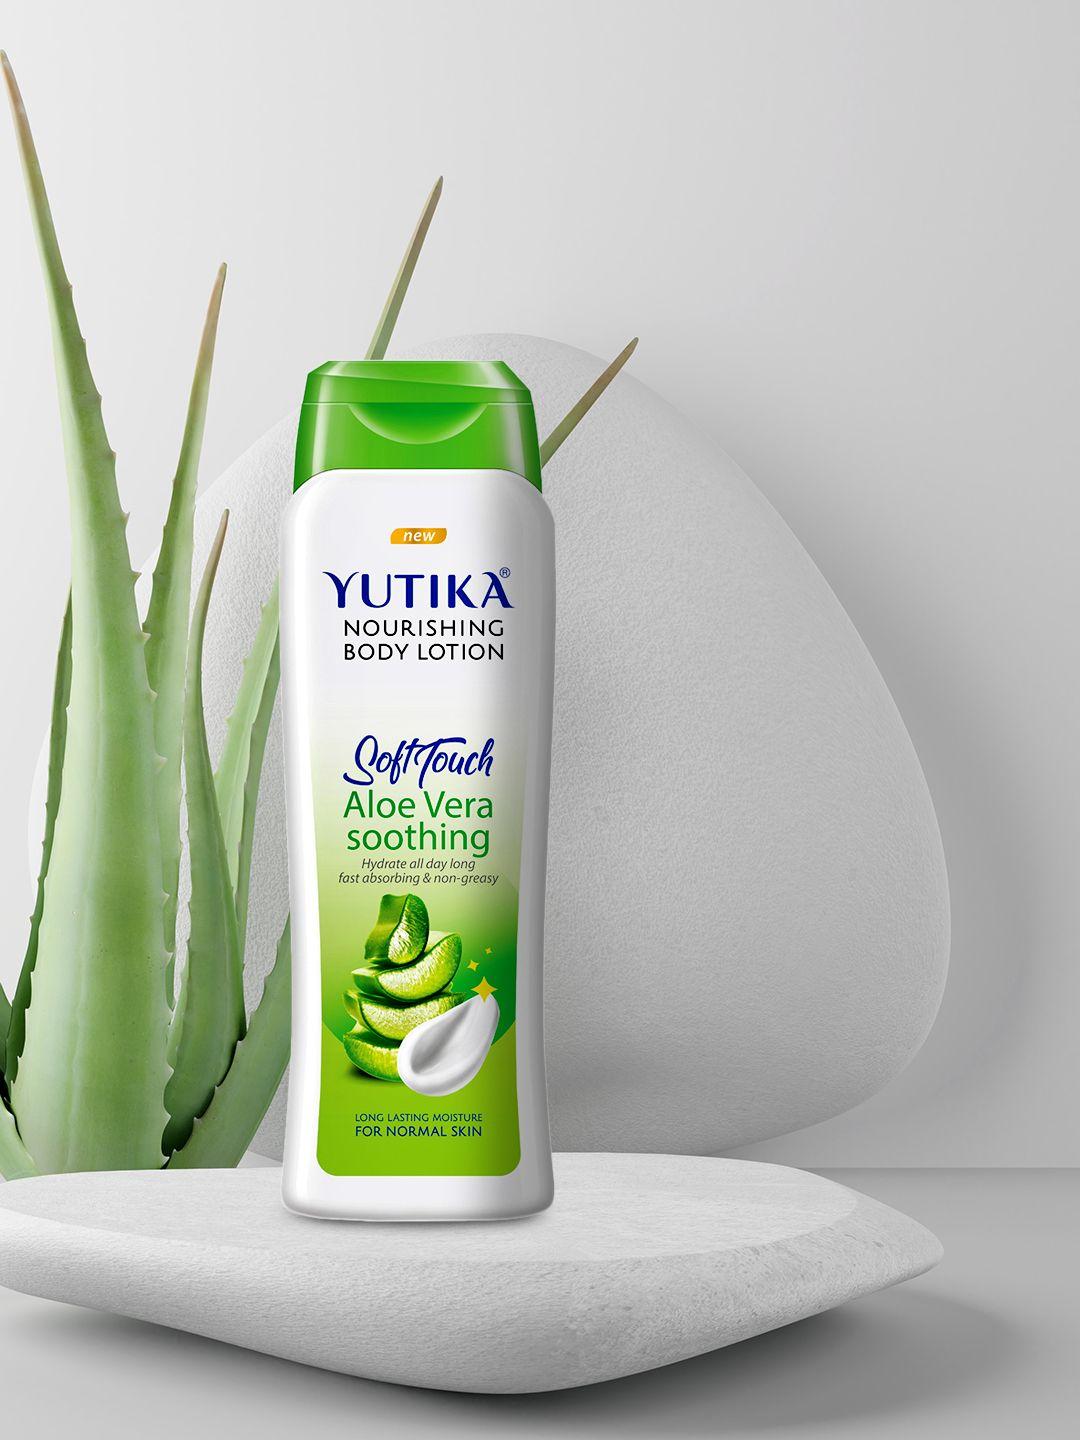 yutika nourishing body lotion soft touch aloe vera soothing - 500 ml